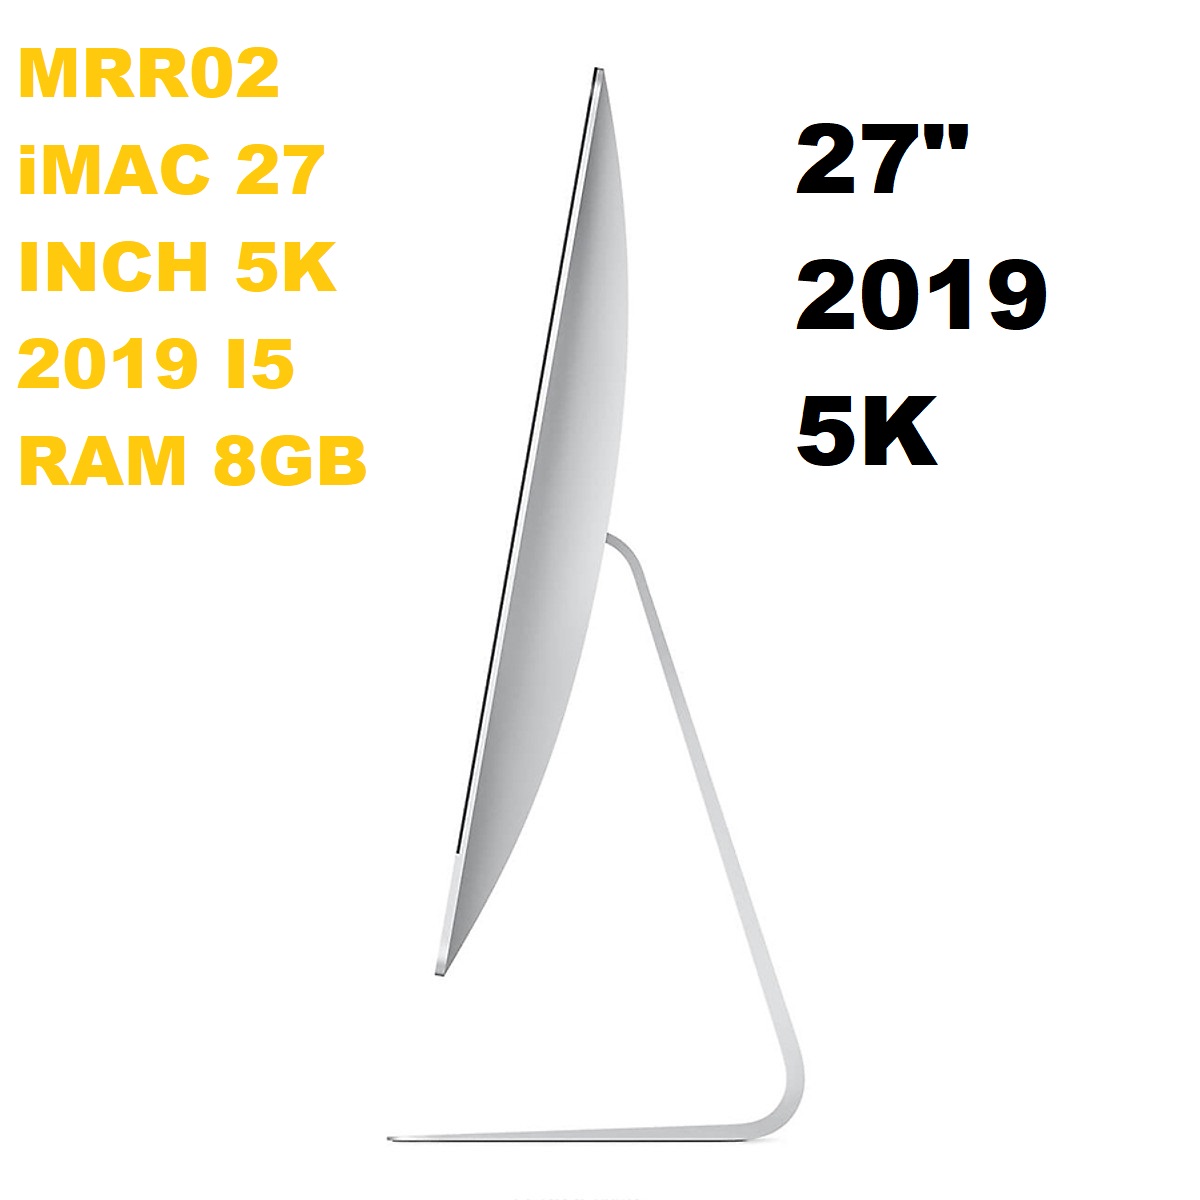 iMac 27-Inch Retina 5K 2019 MRR12 Core i5-3.7GHz Ram 16GB SSD 128GB + 2TB - iMac19,1 - A2115 - 3194